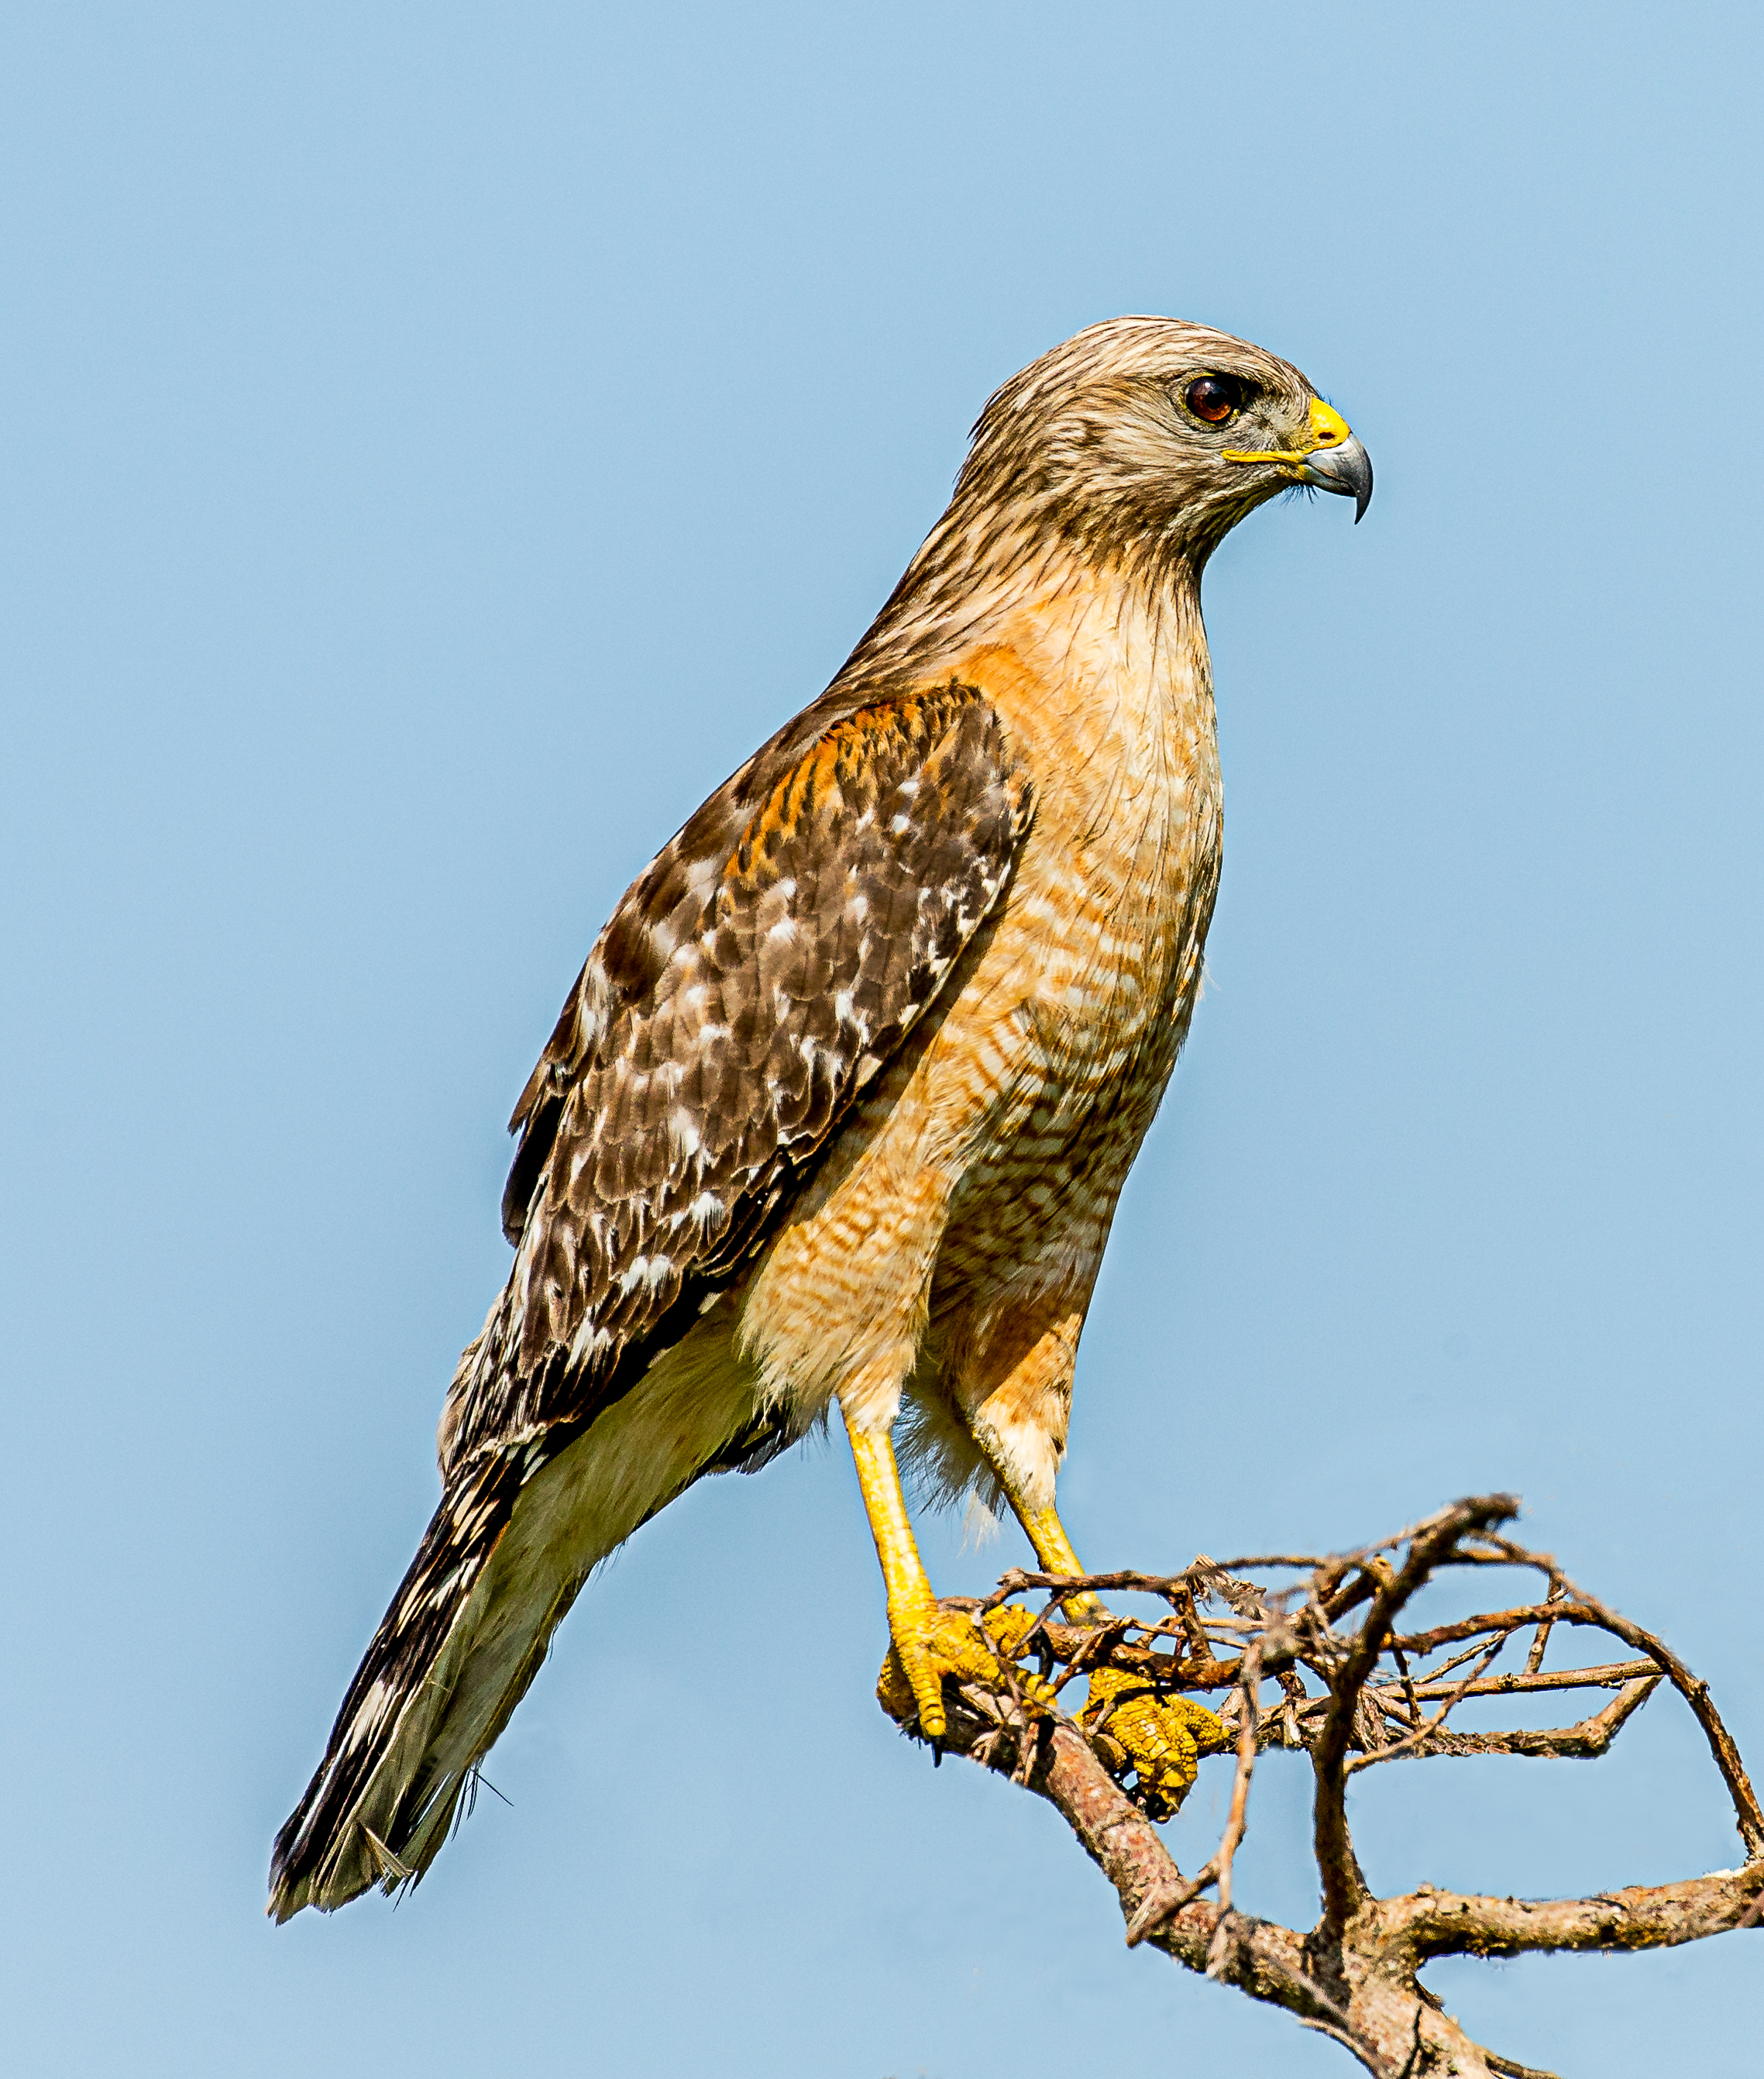 Red-shouldered hawk - Wikipedia